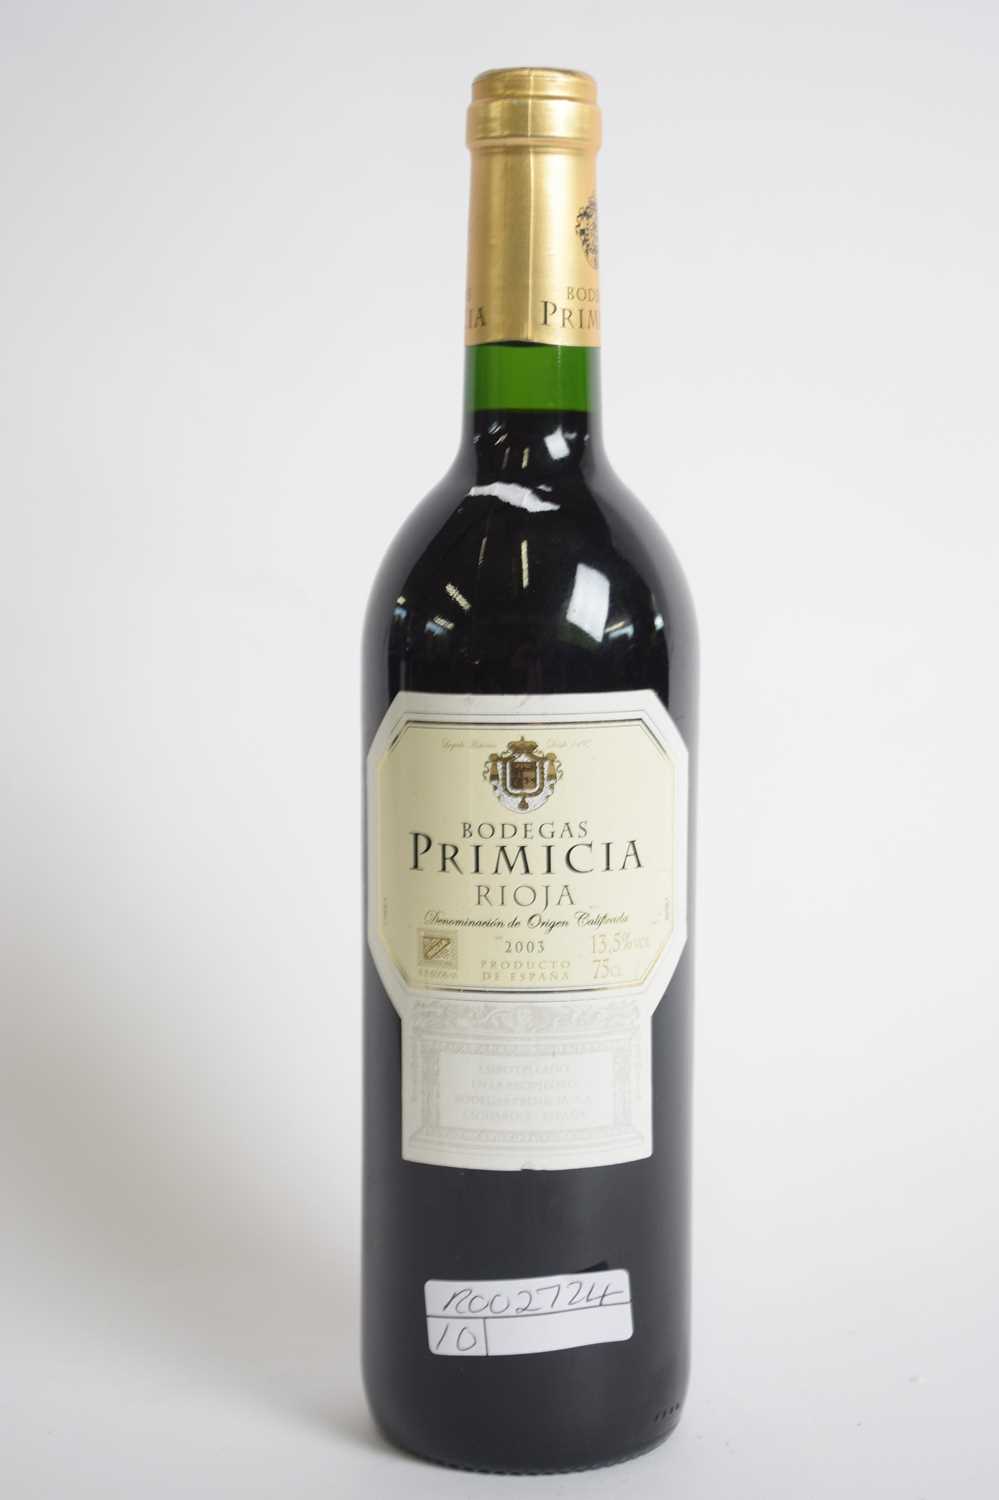 One bottle Bodegas Primicia Rioja 2003, 75cl - Image 2 of 3